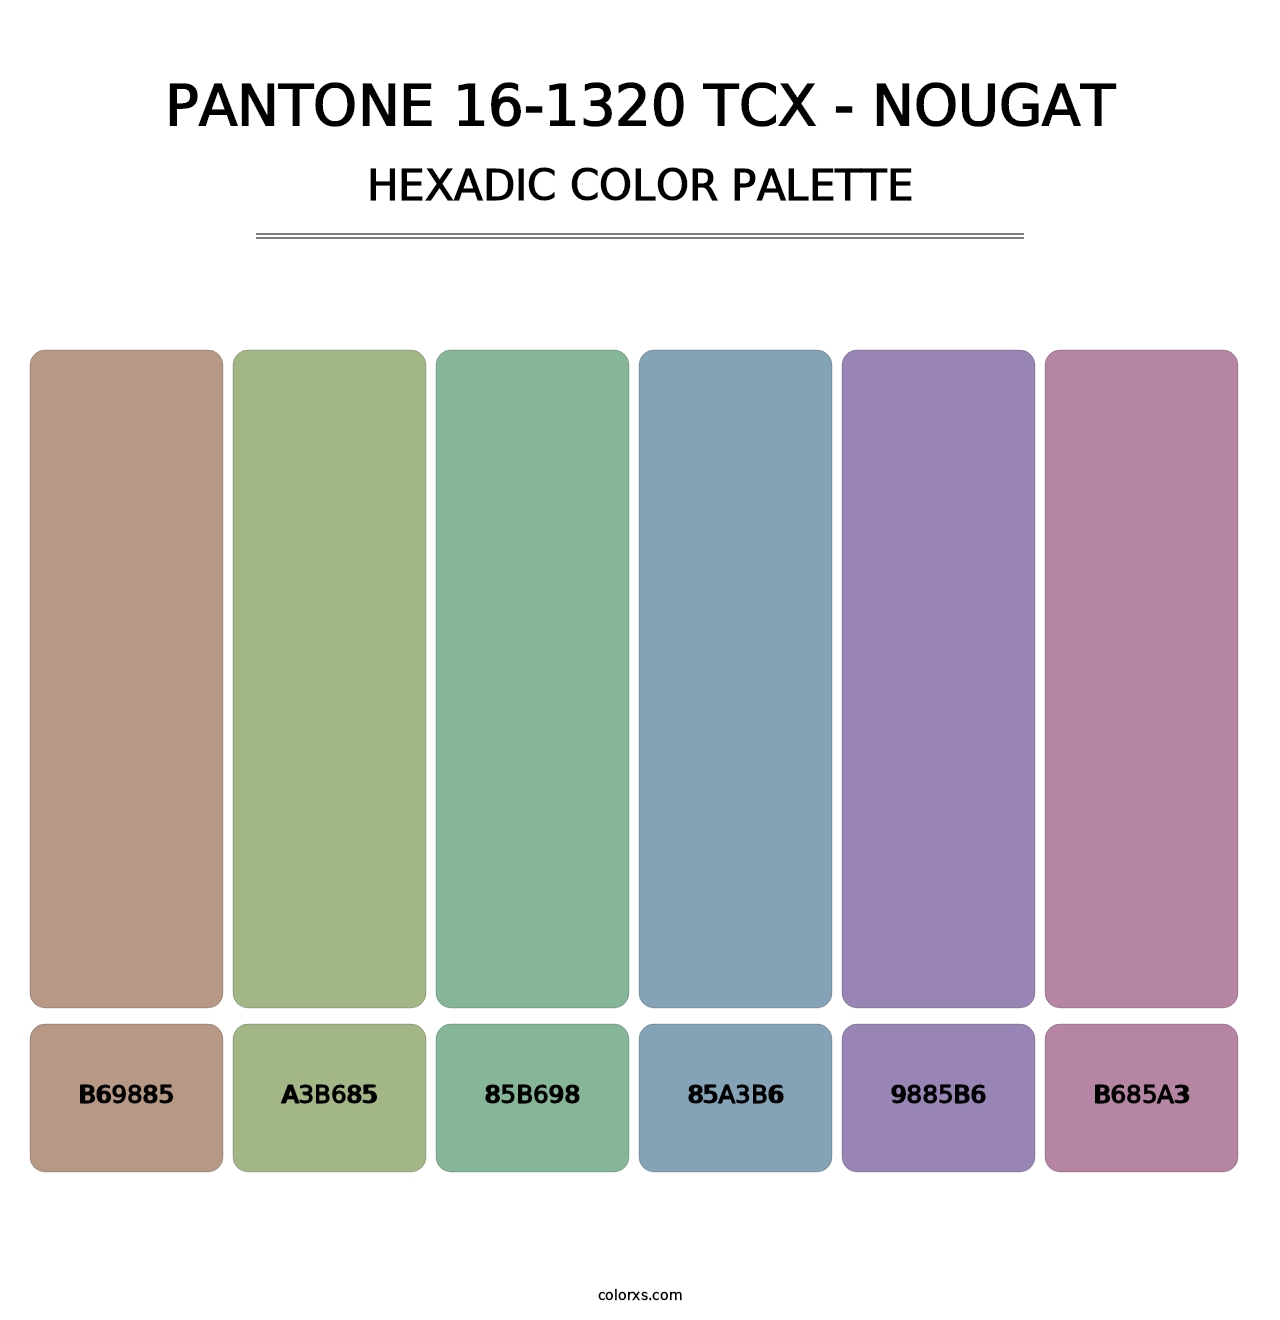 PANTONE 16-1320 TCX - Nougat - Hexadic Color Palette